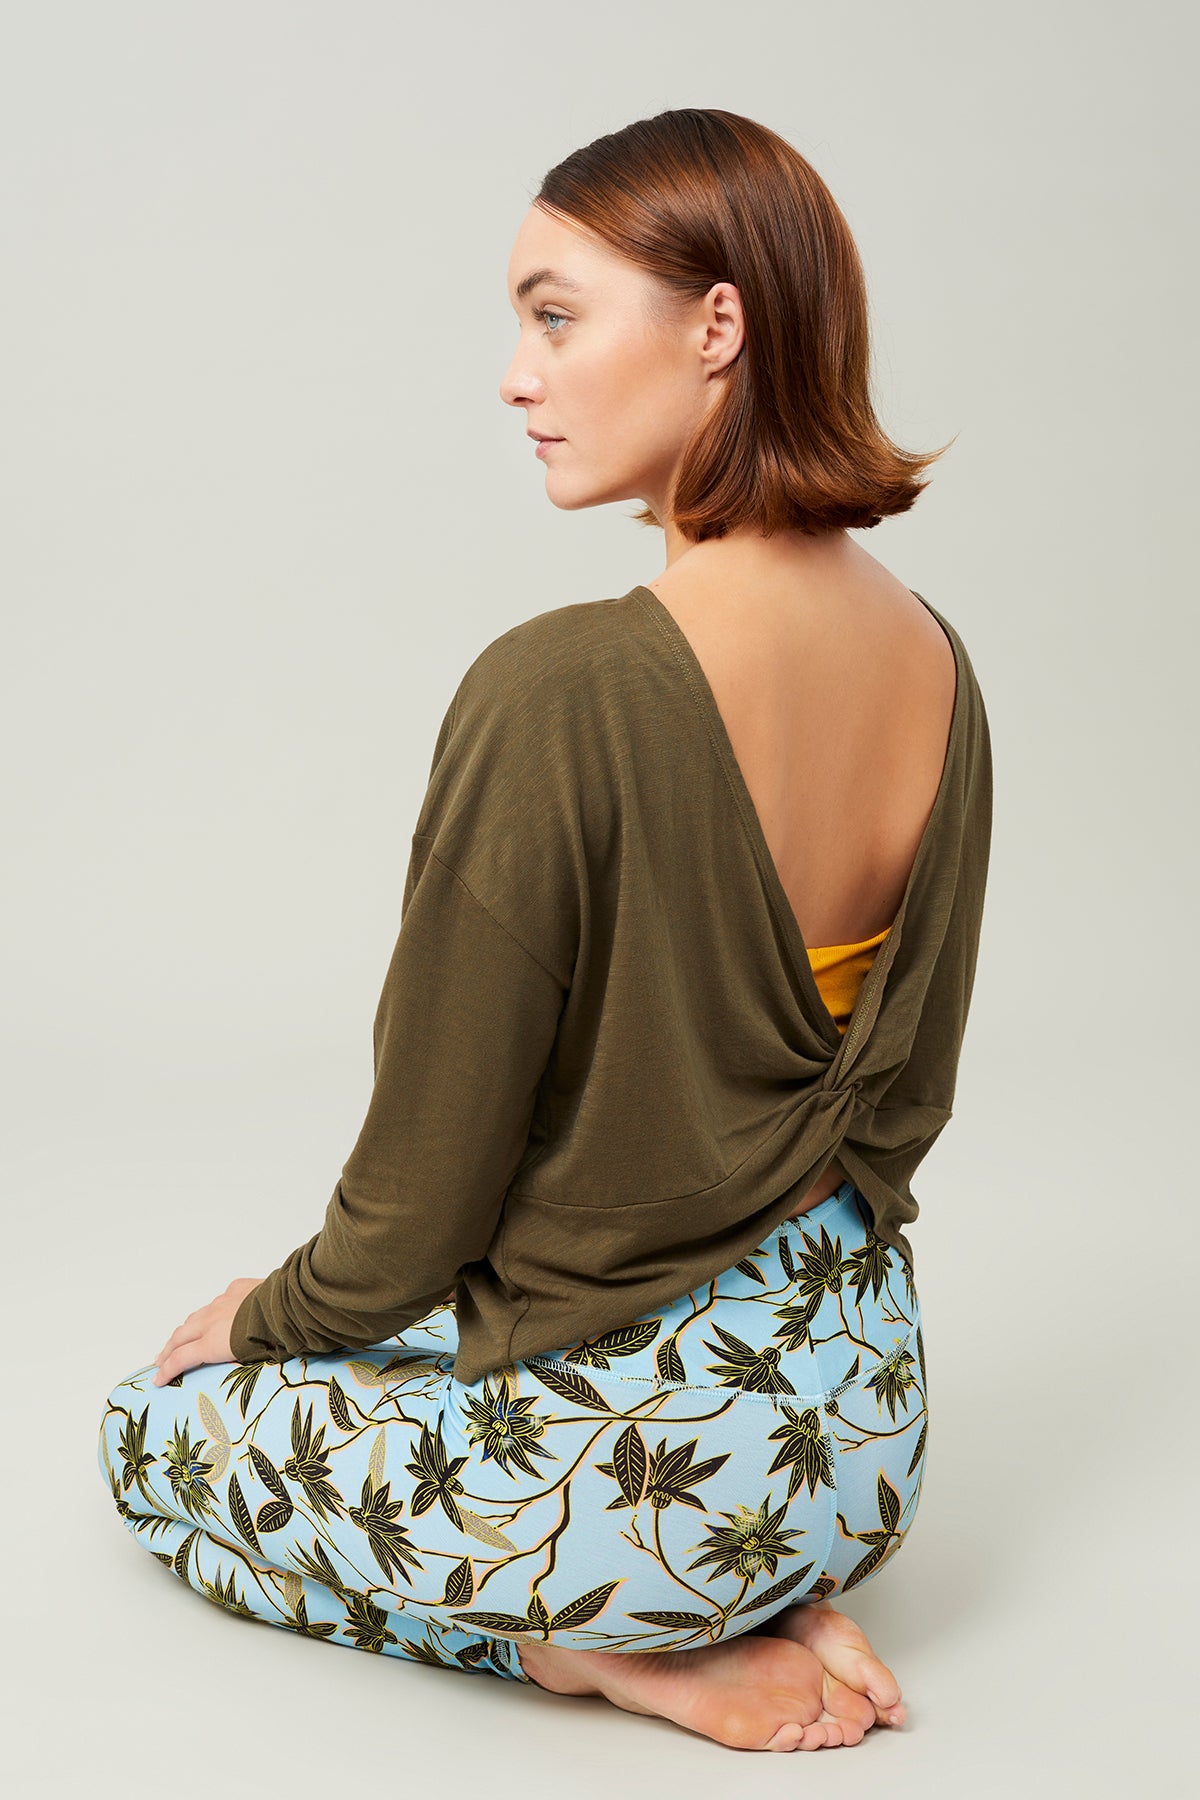 Mandala Yoga Shirt Khaki Outfit Rückseite - Reversible Top